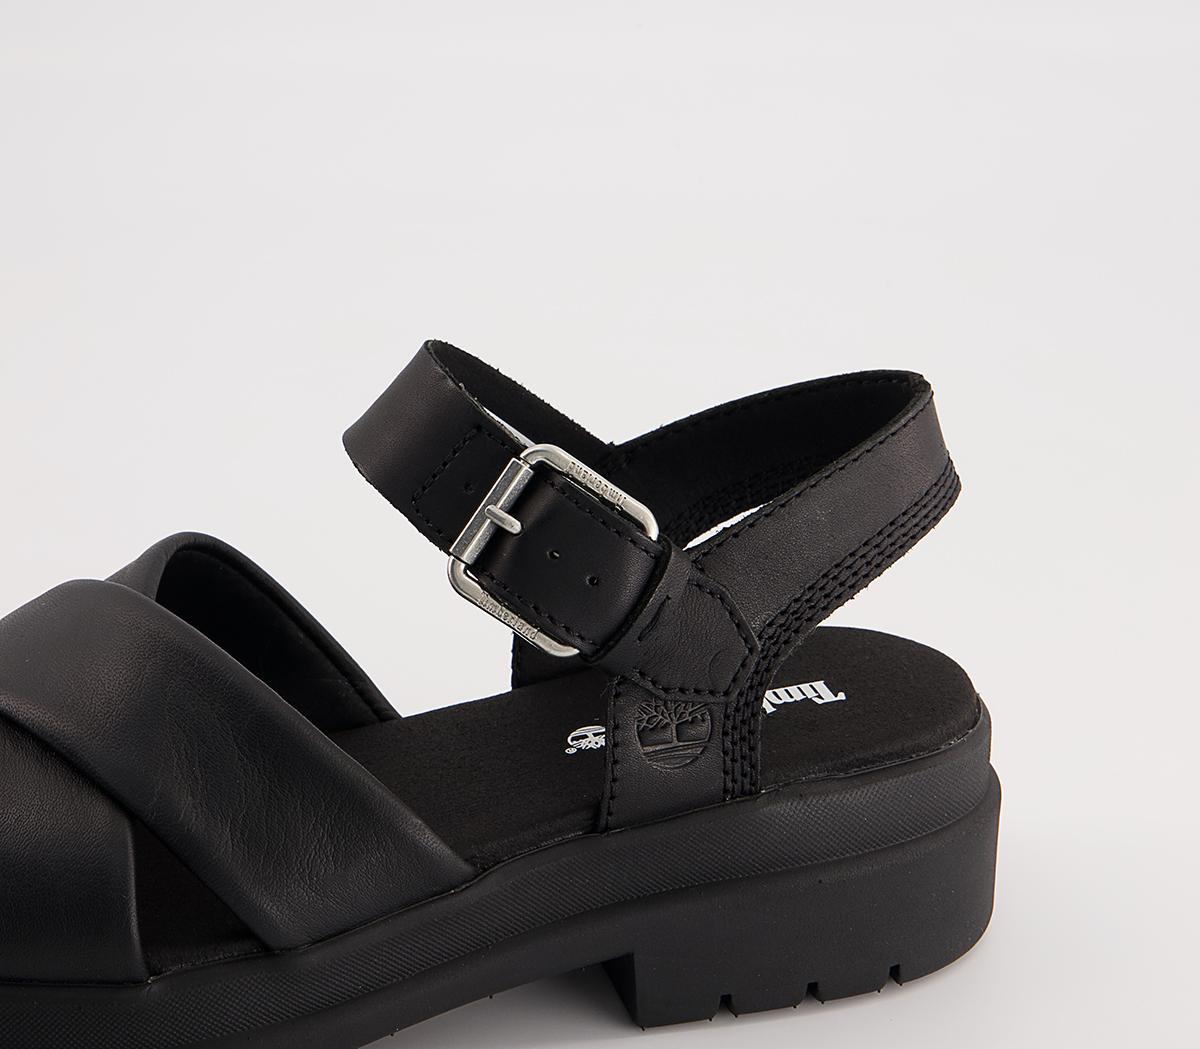 Timberland London Vibe X Strap Sandals Black Full Grain - Women’s Sandals